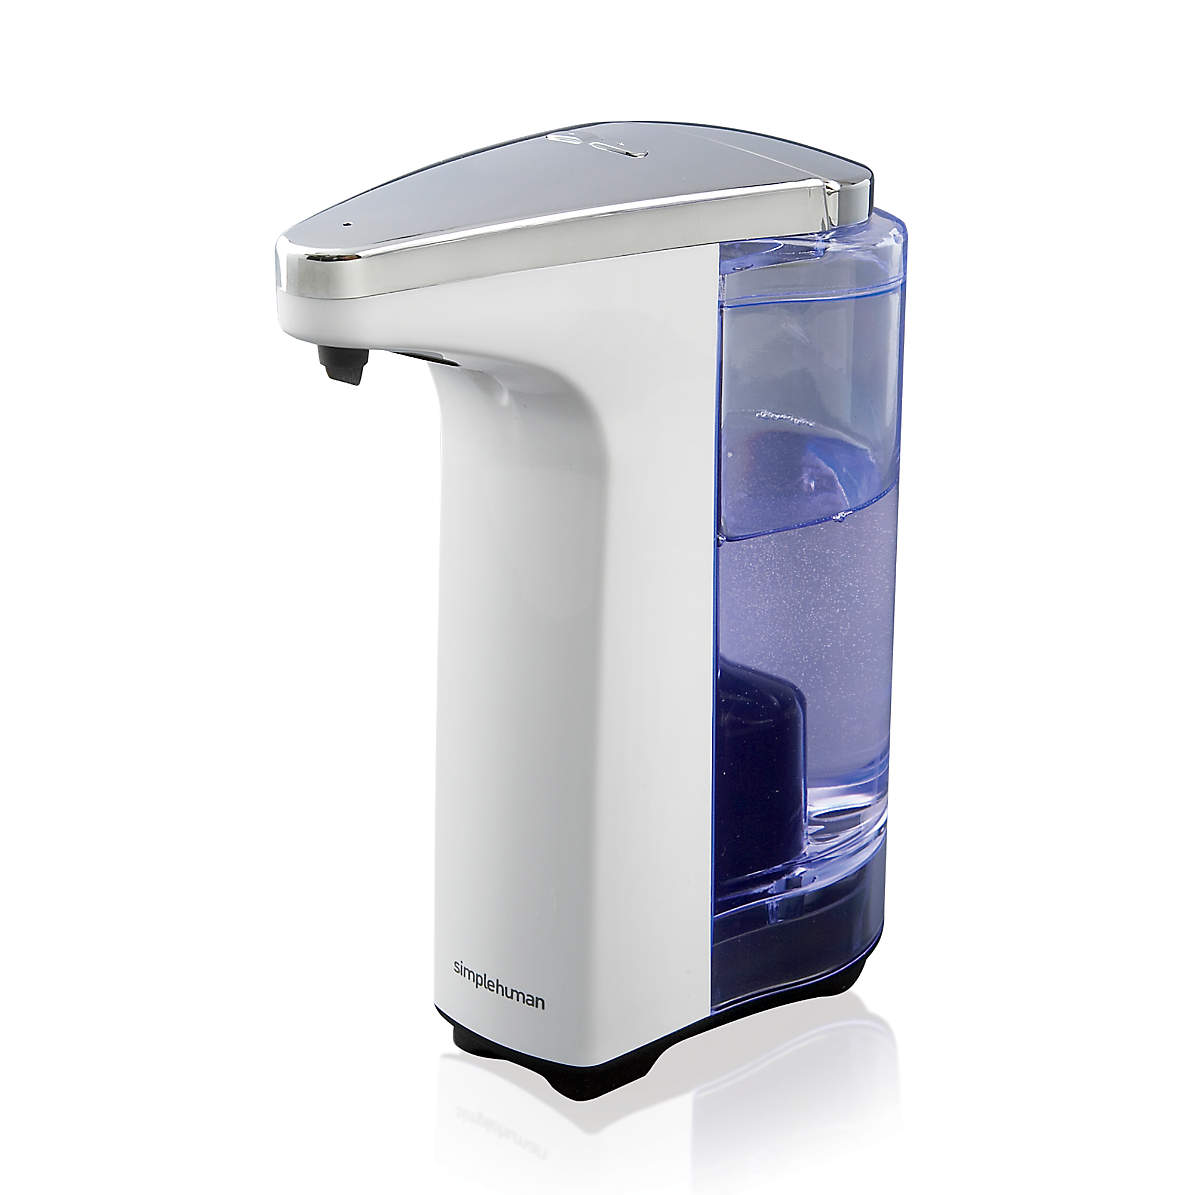 simplehuman White Compact Sensor Soap Dispenser + Reviews